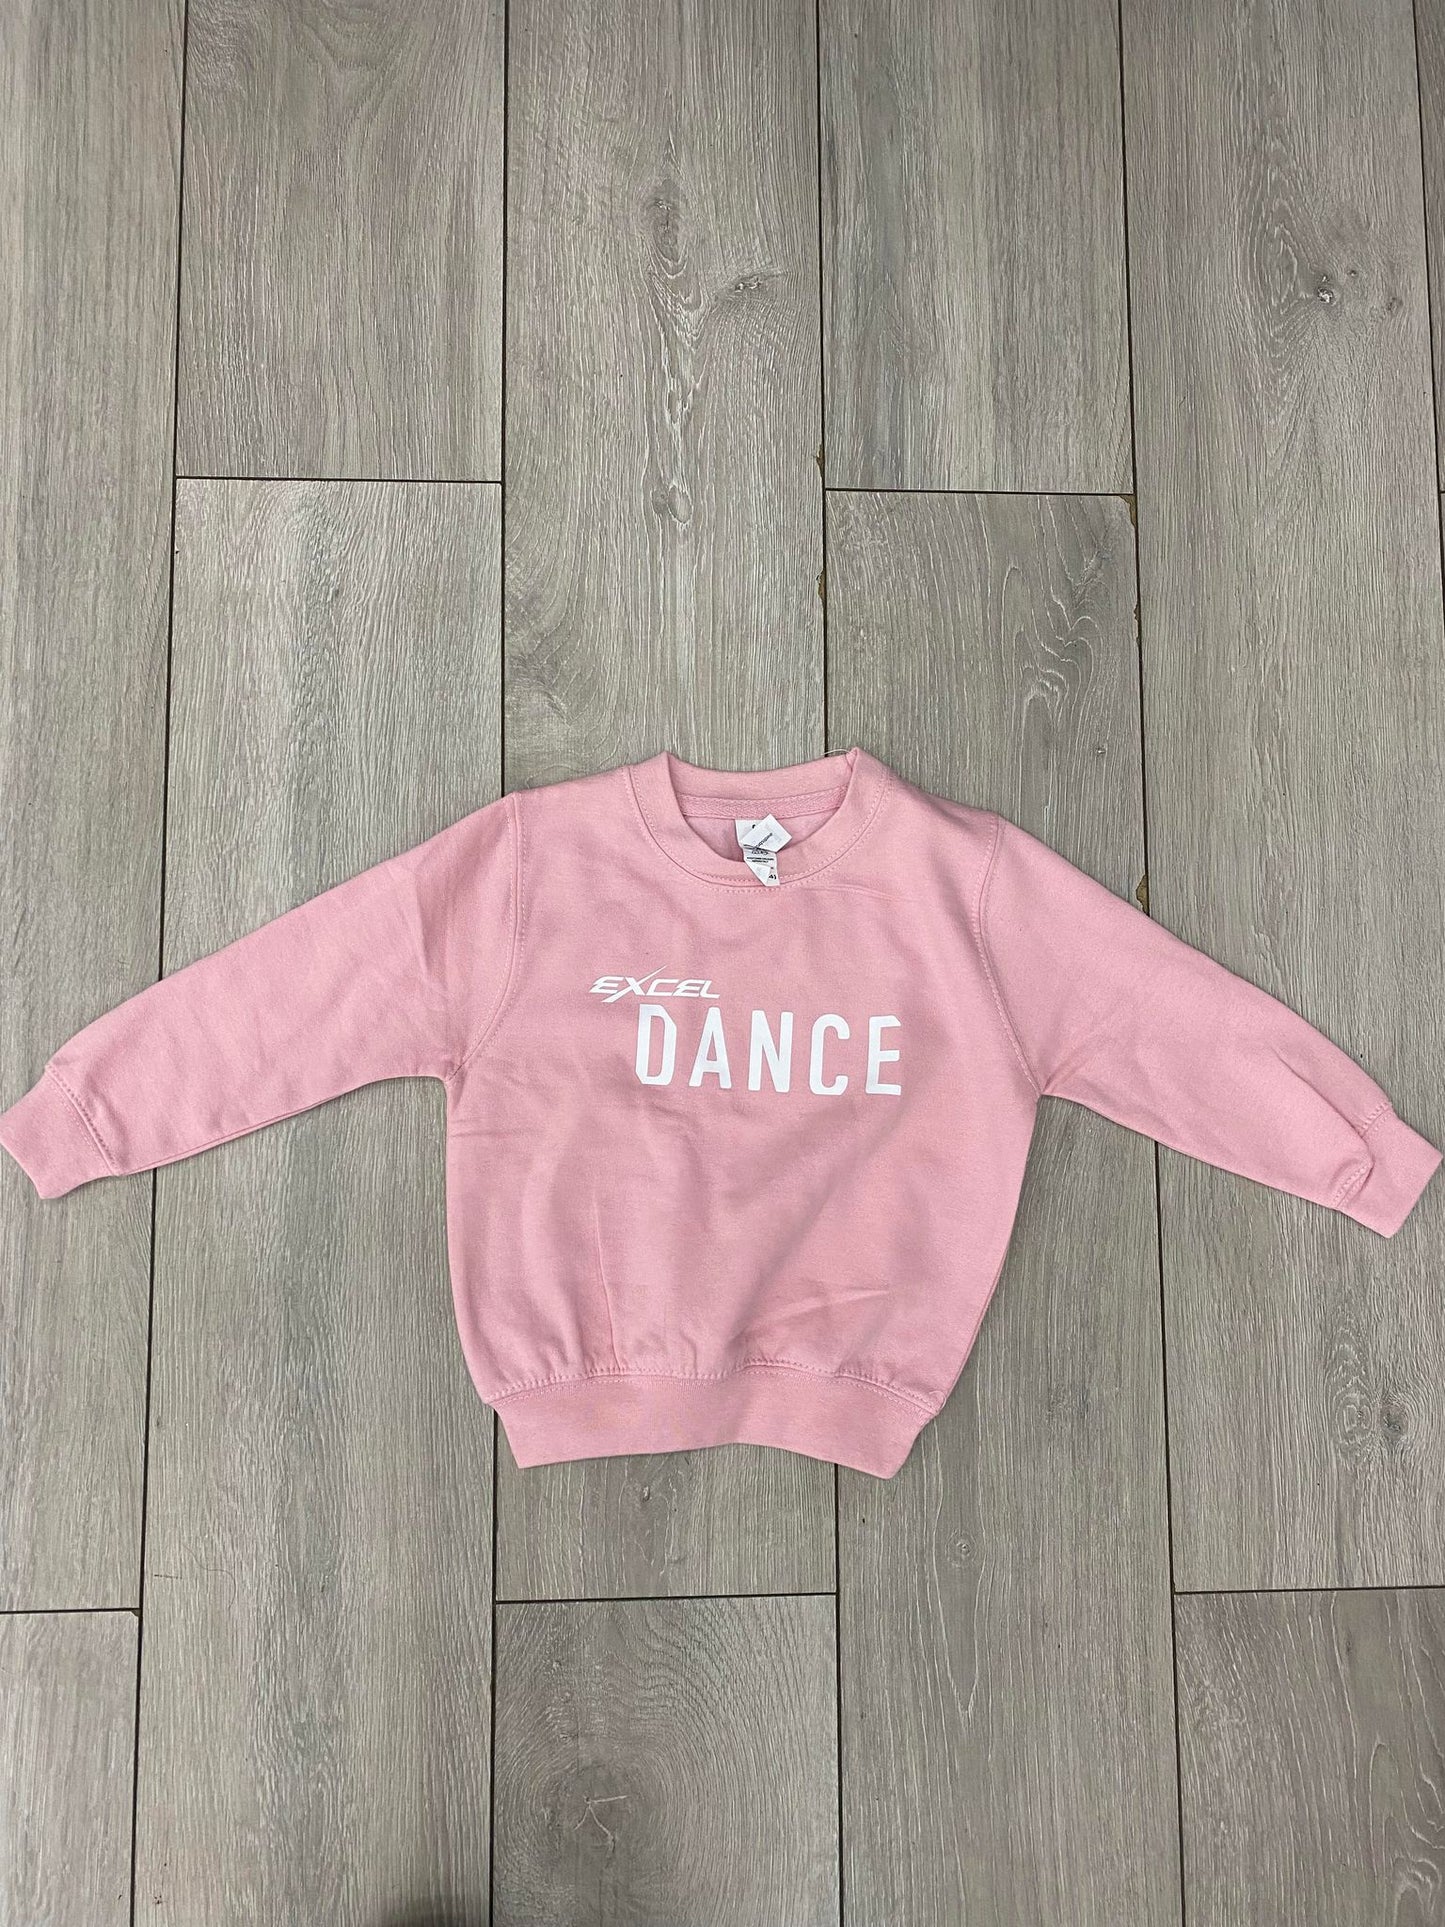 Excel Dance Sweater/ Jumper